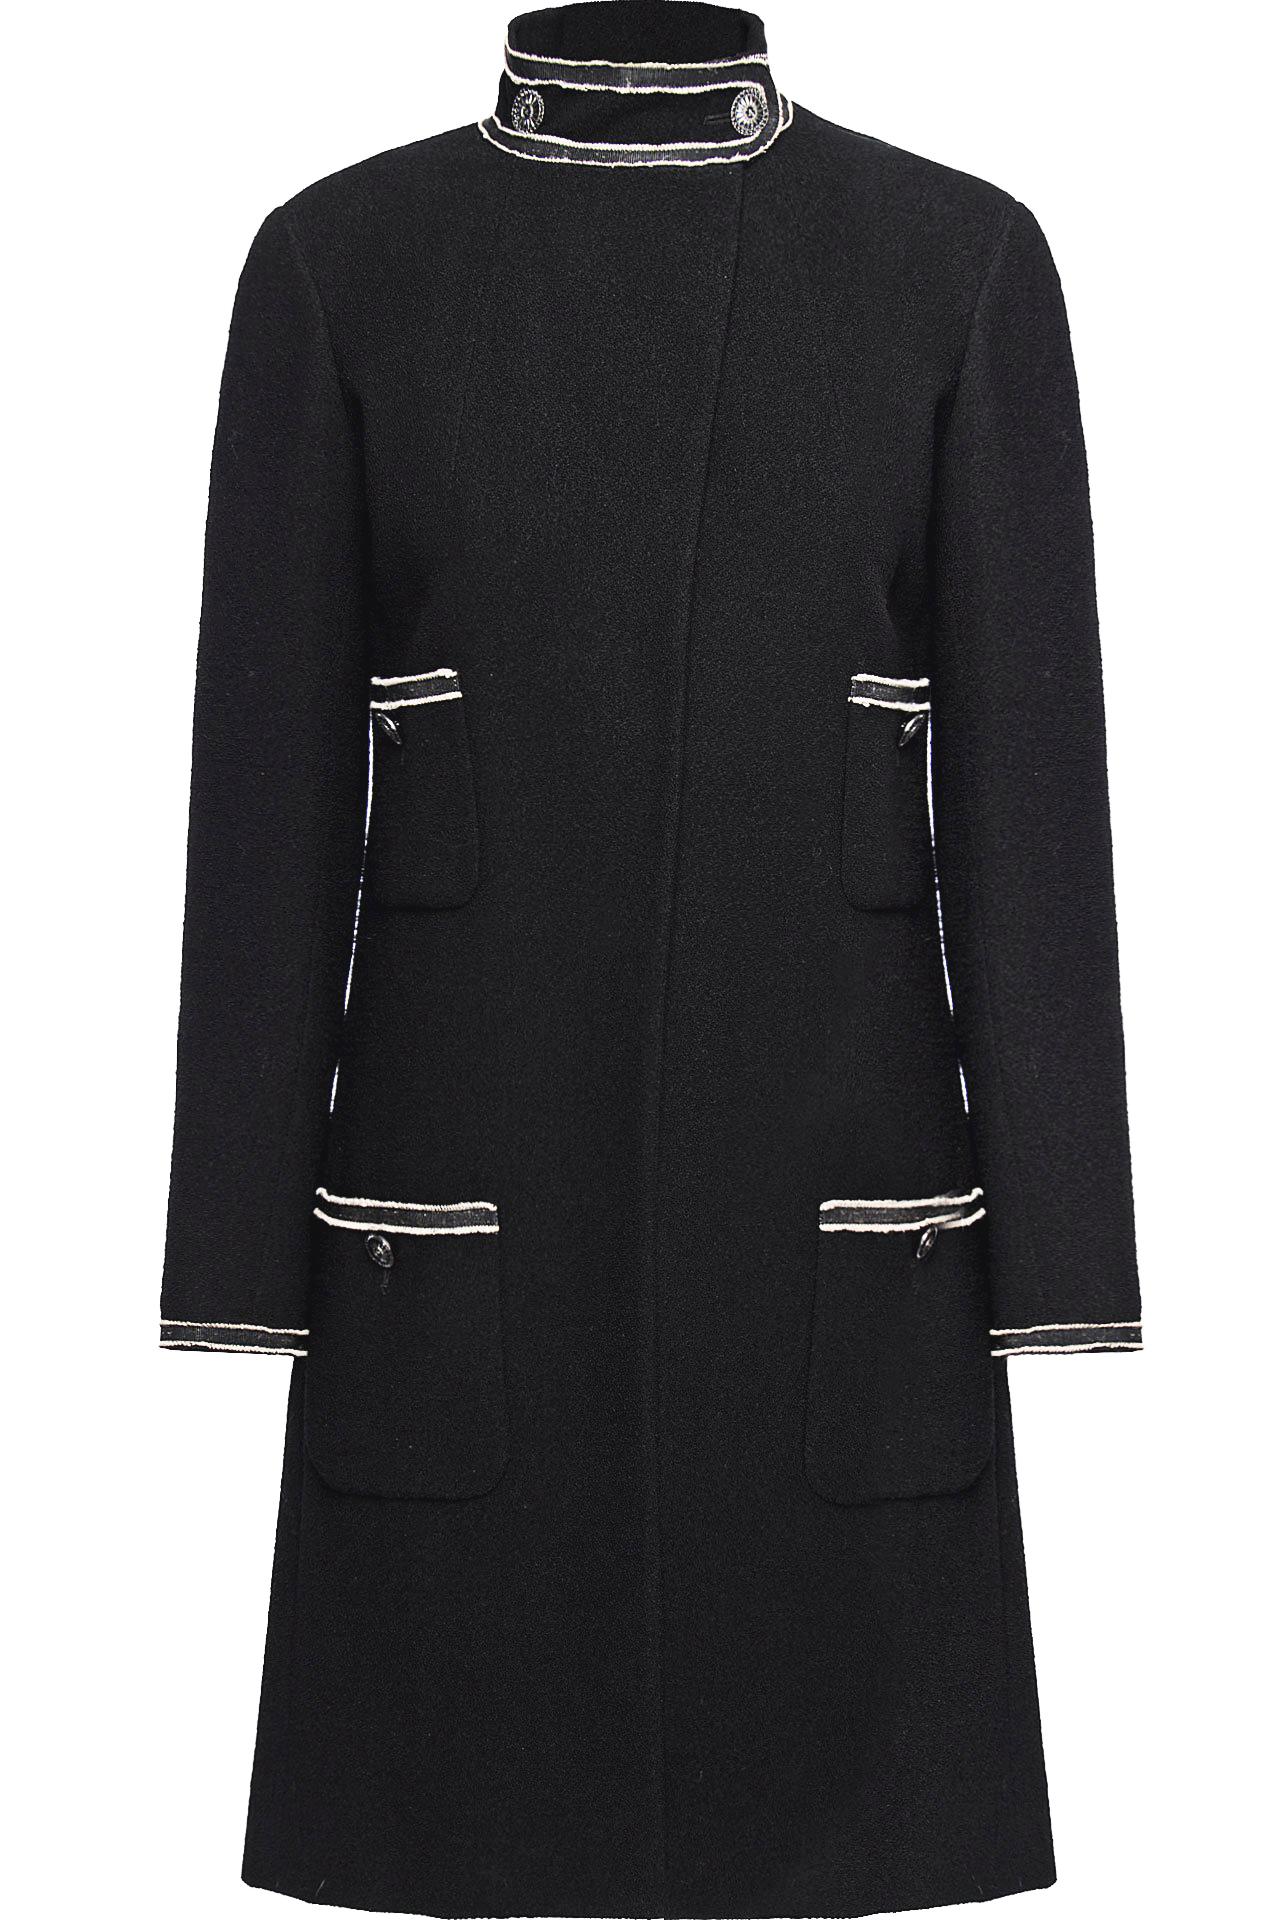 Chanel Paris / Singapore Runway Black Tweed Coat 4